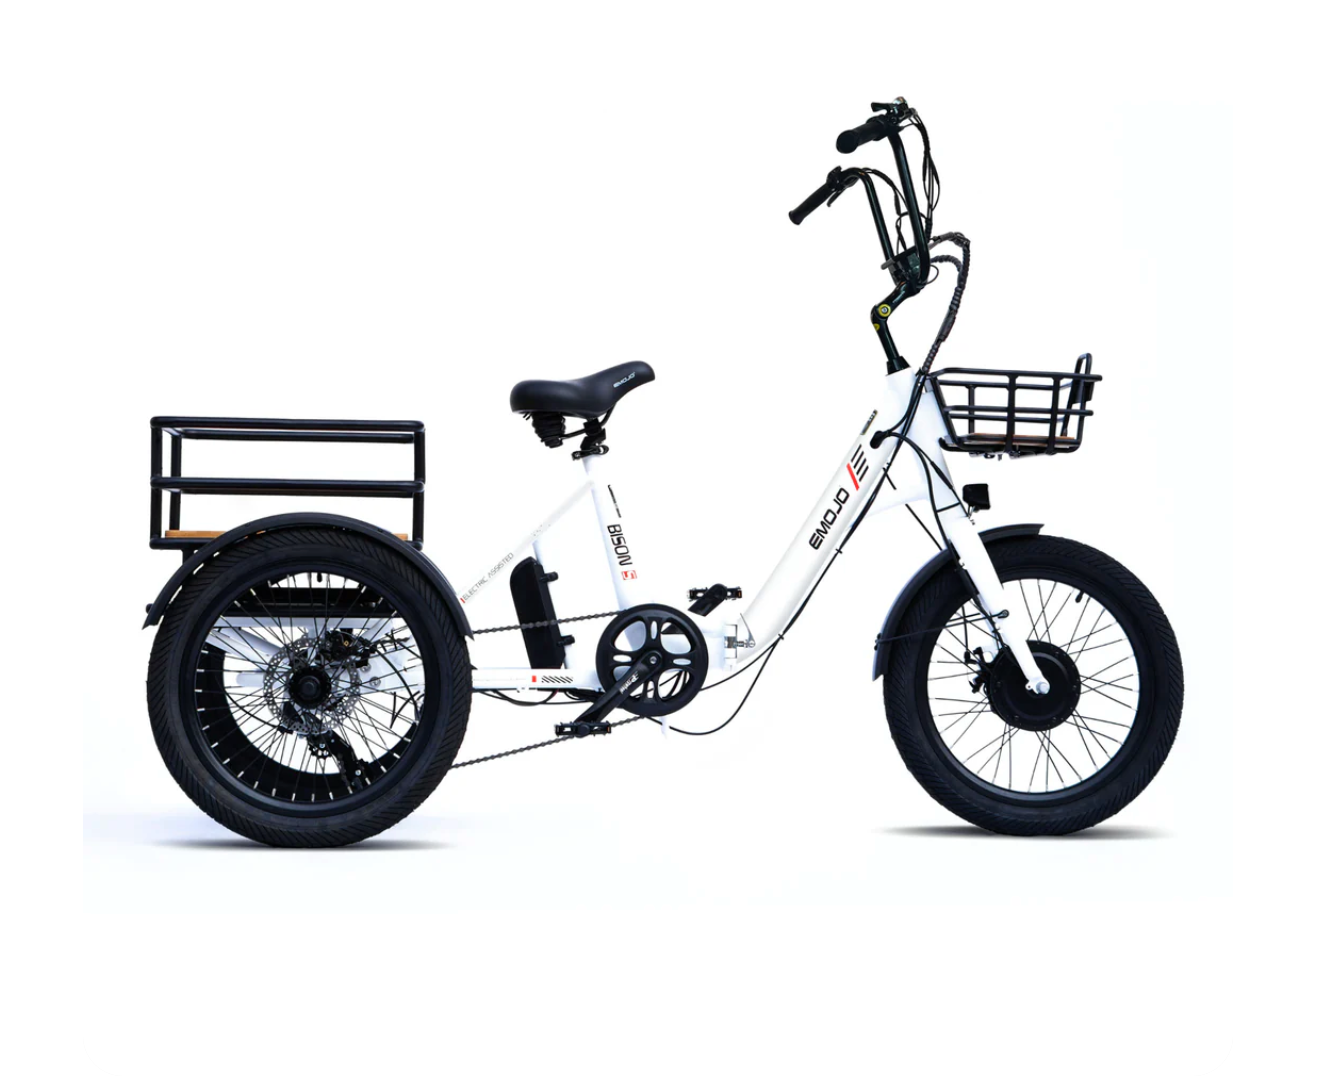 Emojo Bison S Folding Electric Trike Bike BONUS GIFT